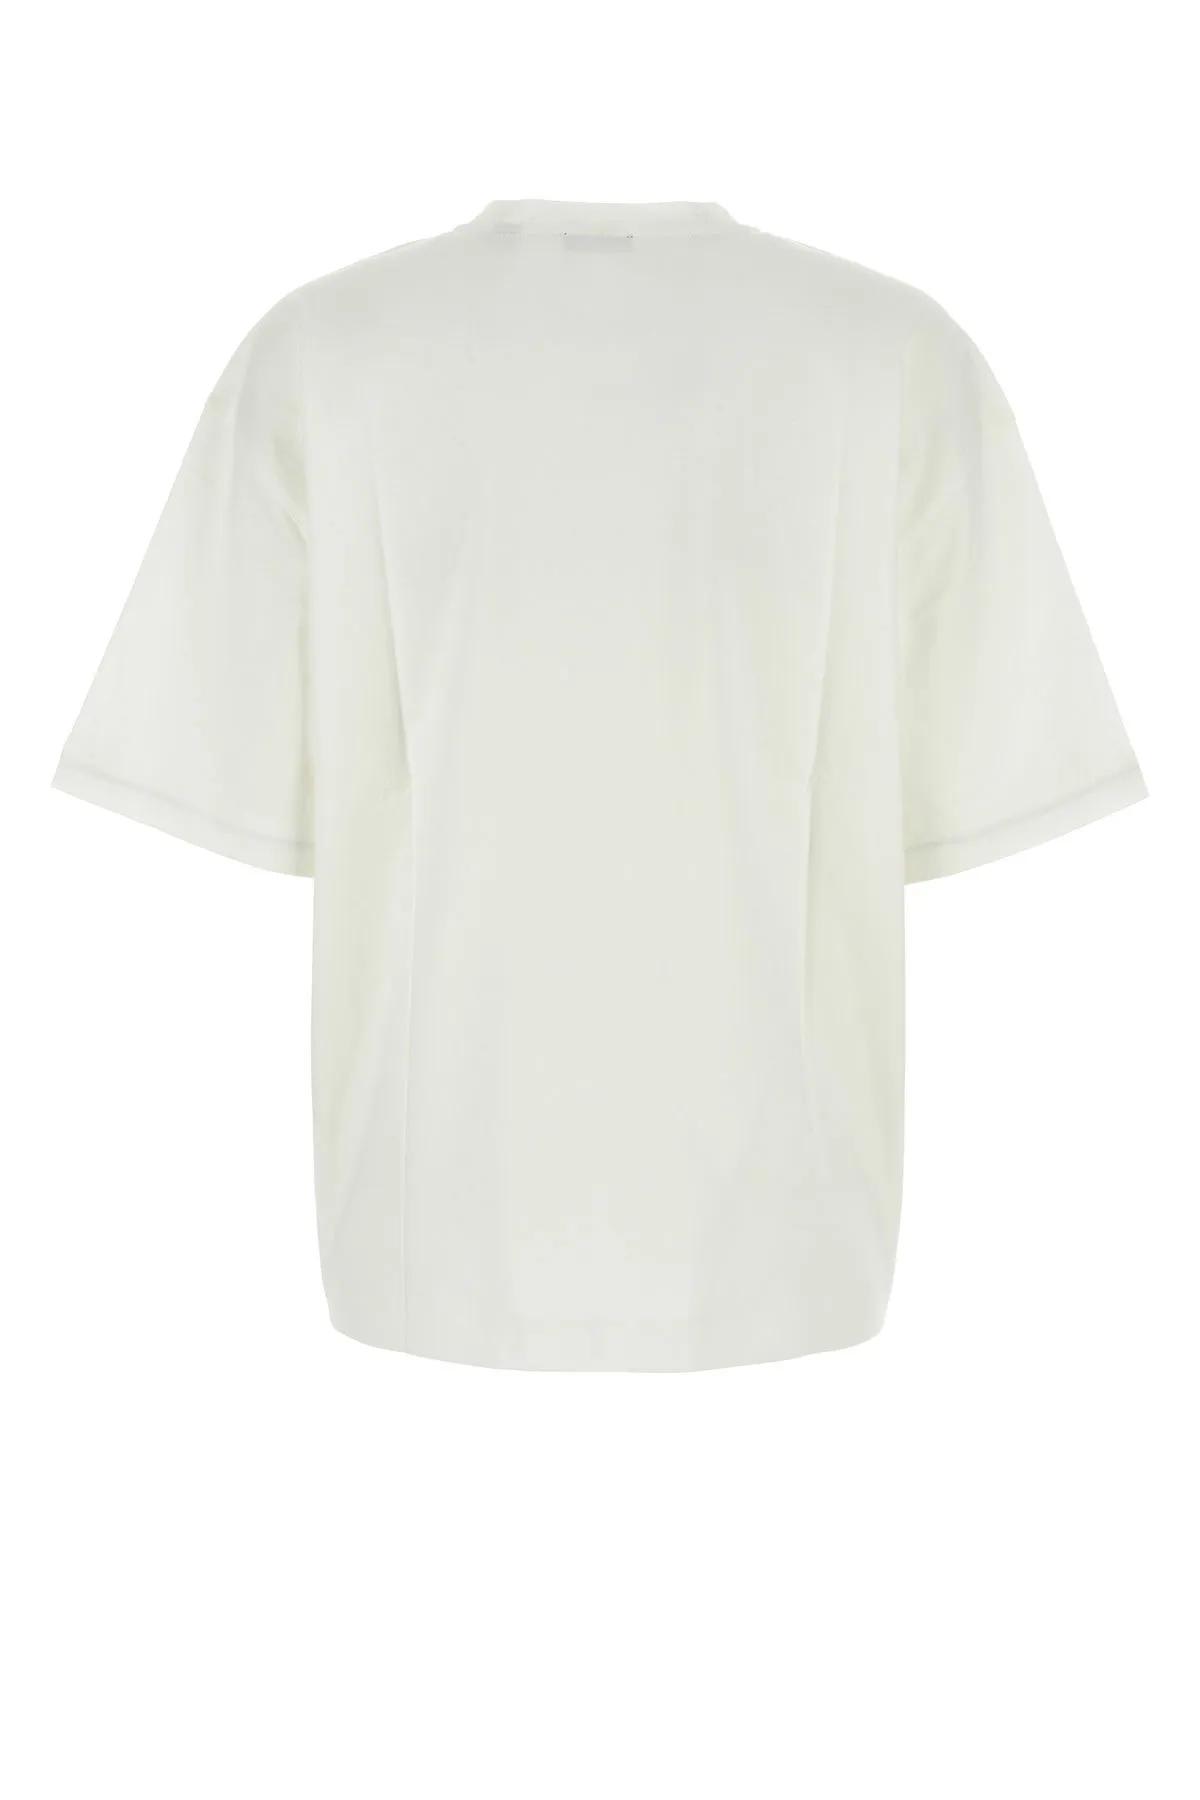 Shop Burberry White Cotton Oversize T-shirt